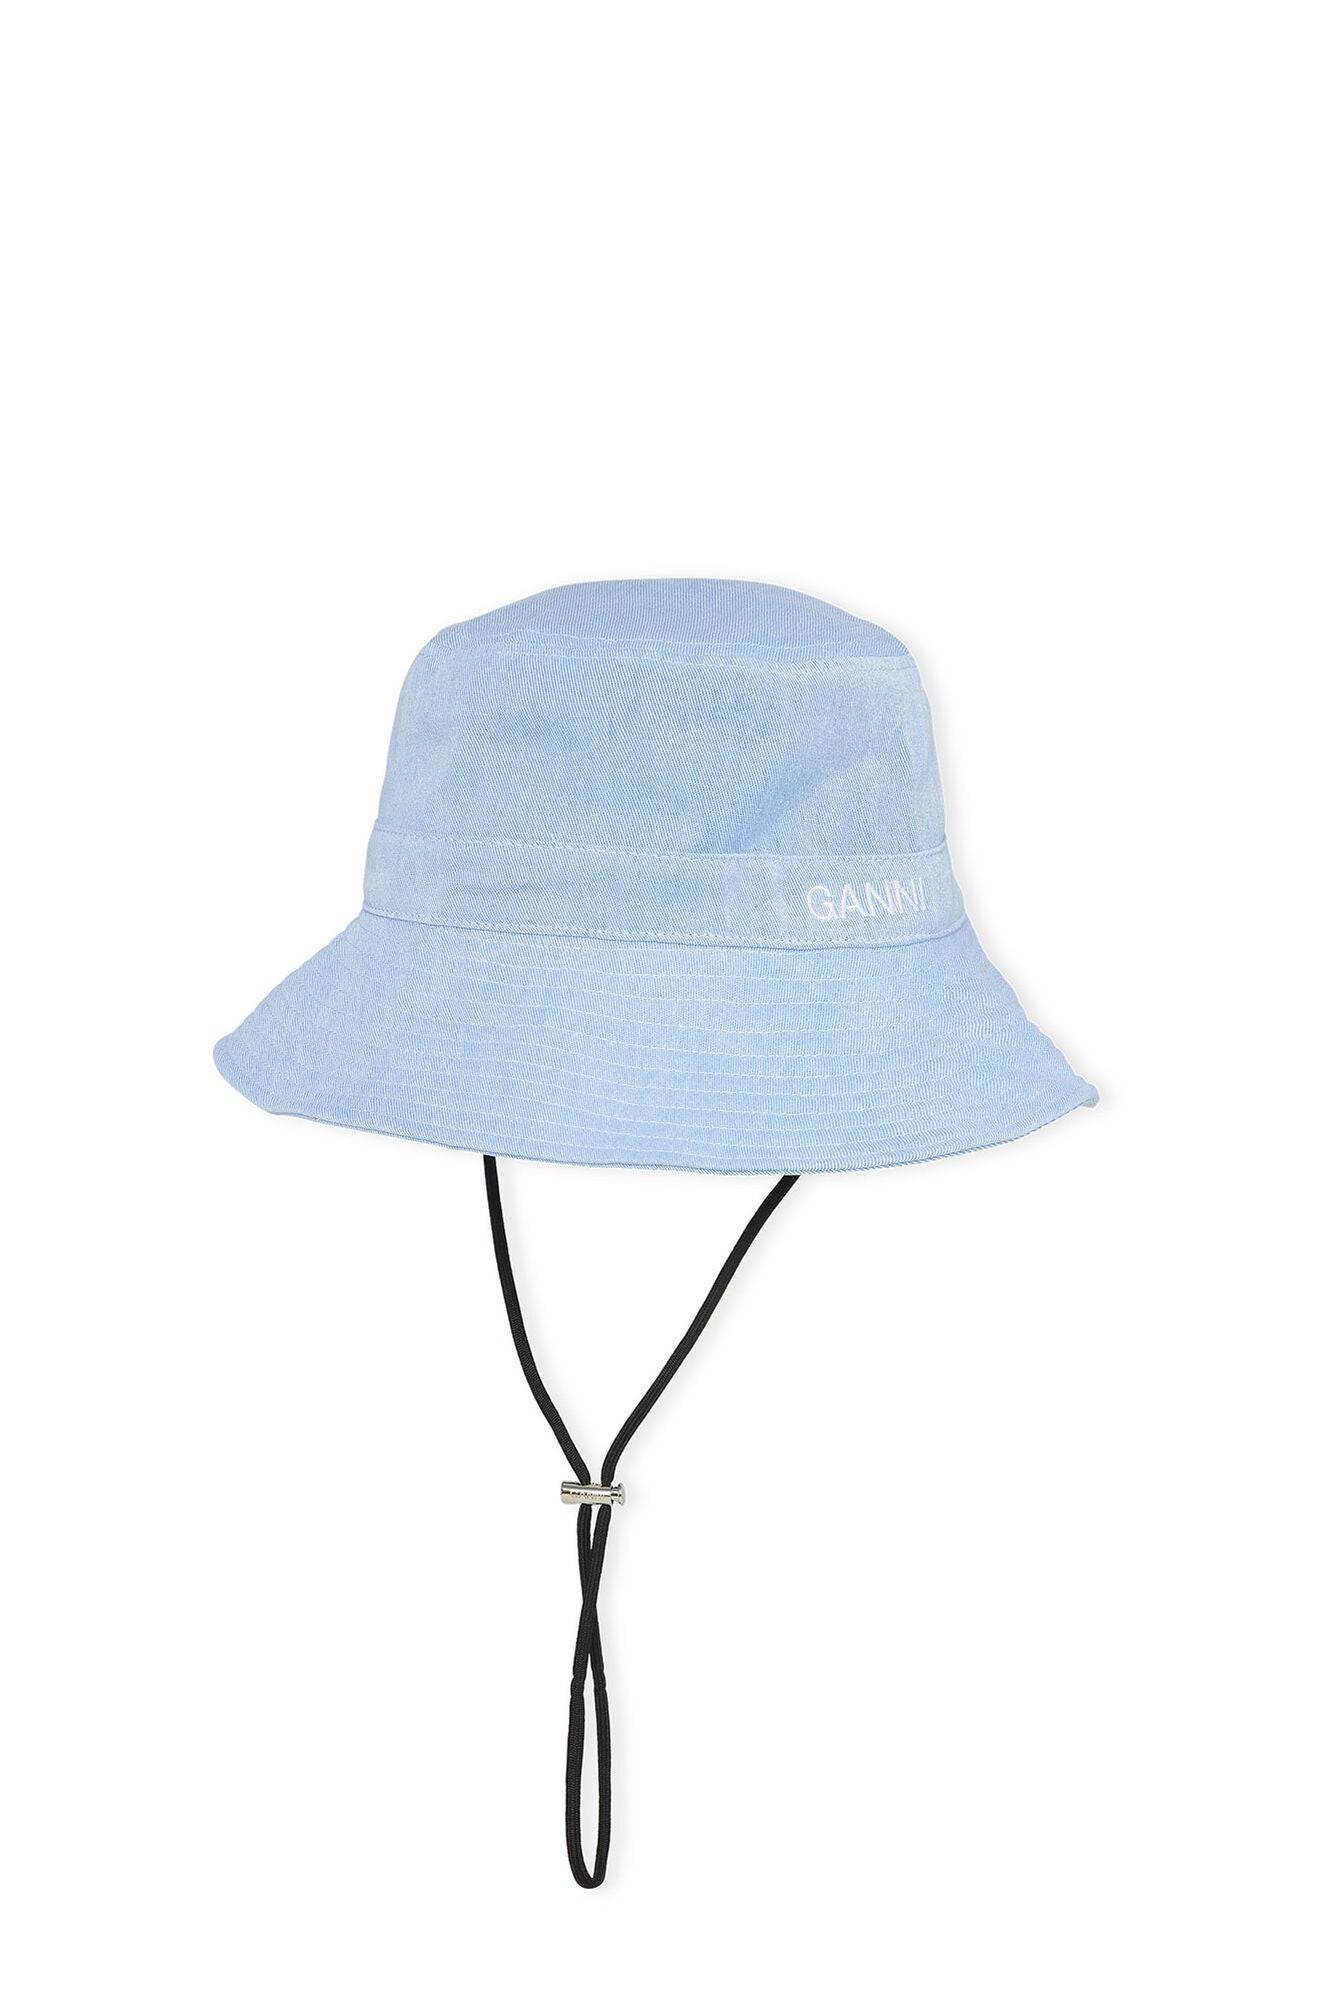 FISHERMAN BUCKET HAT IN BABY BLUE - Romi Boutique